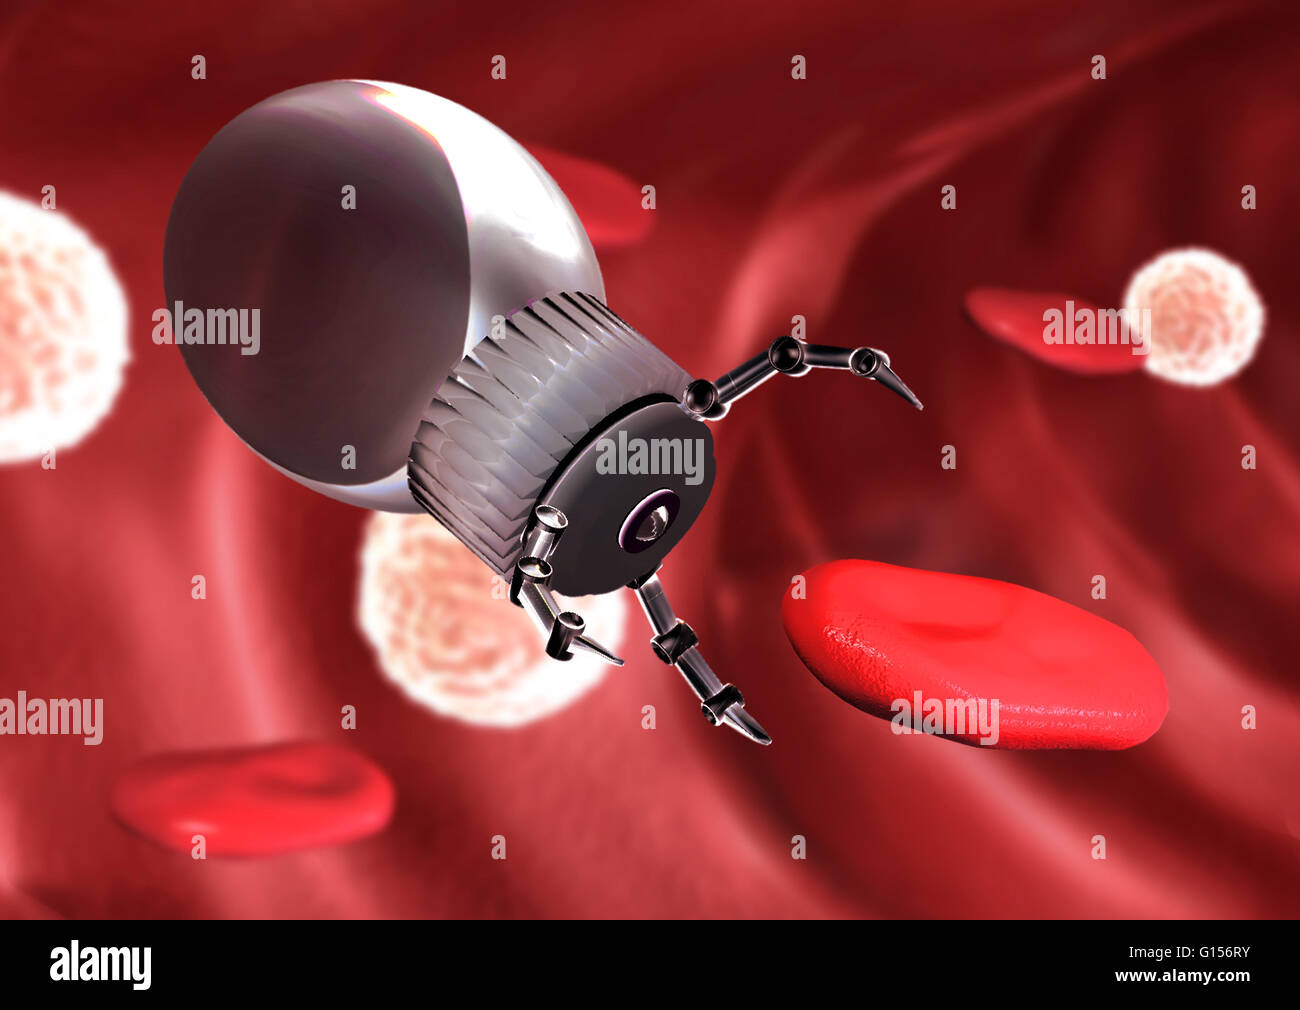 Nanotechnology. Nanobot aiding red blood cell. Stock Photo